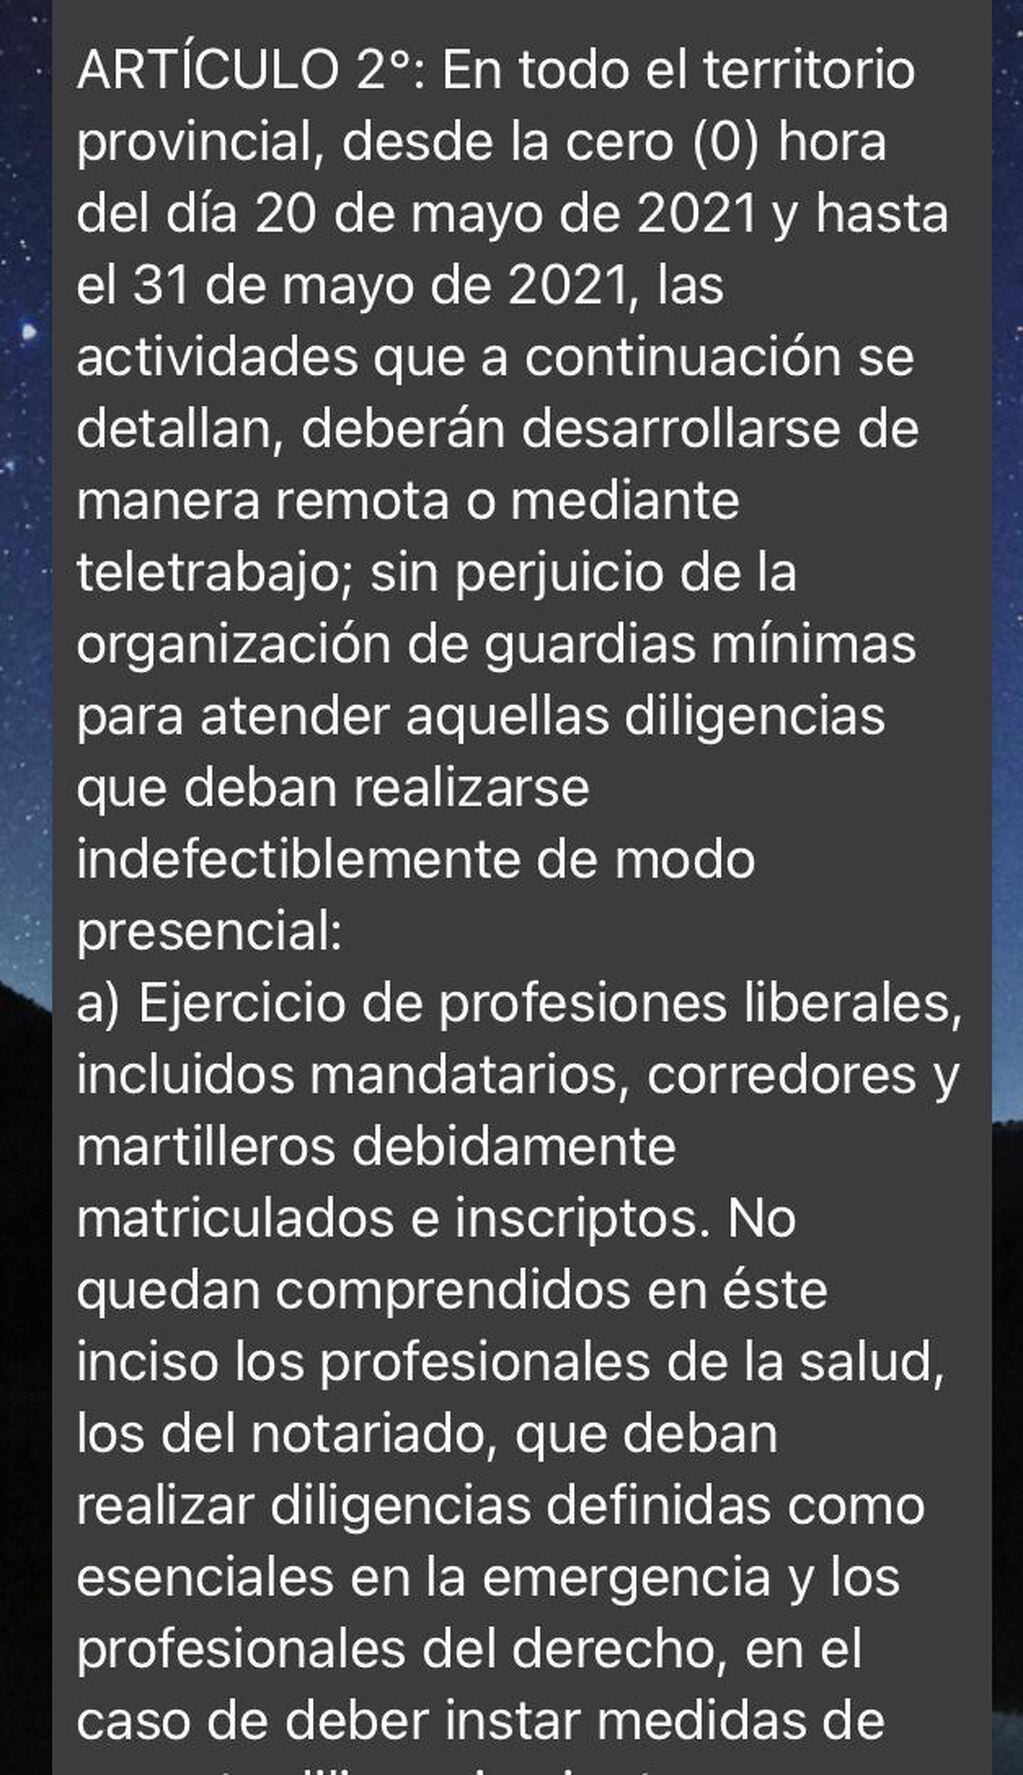 Circula por grupos de WhatsApp información falsa sobre supuestas medidas sanitarias en Córdoba